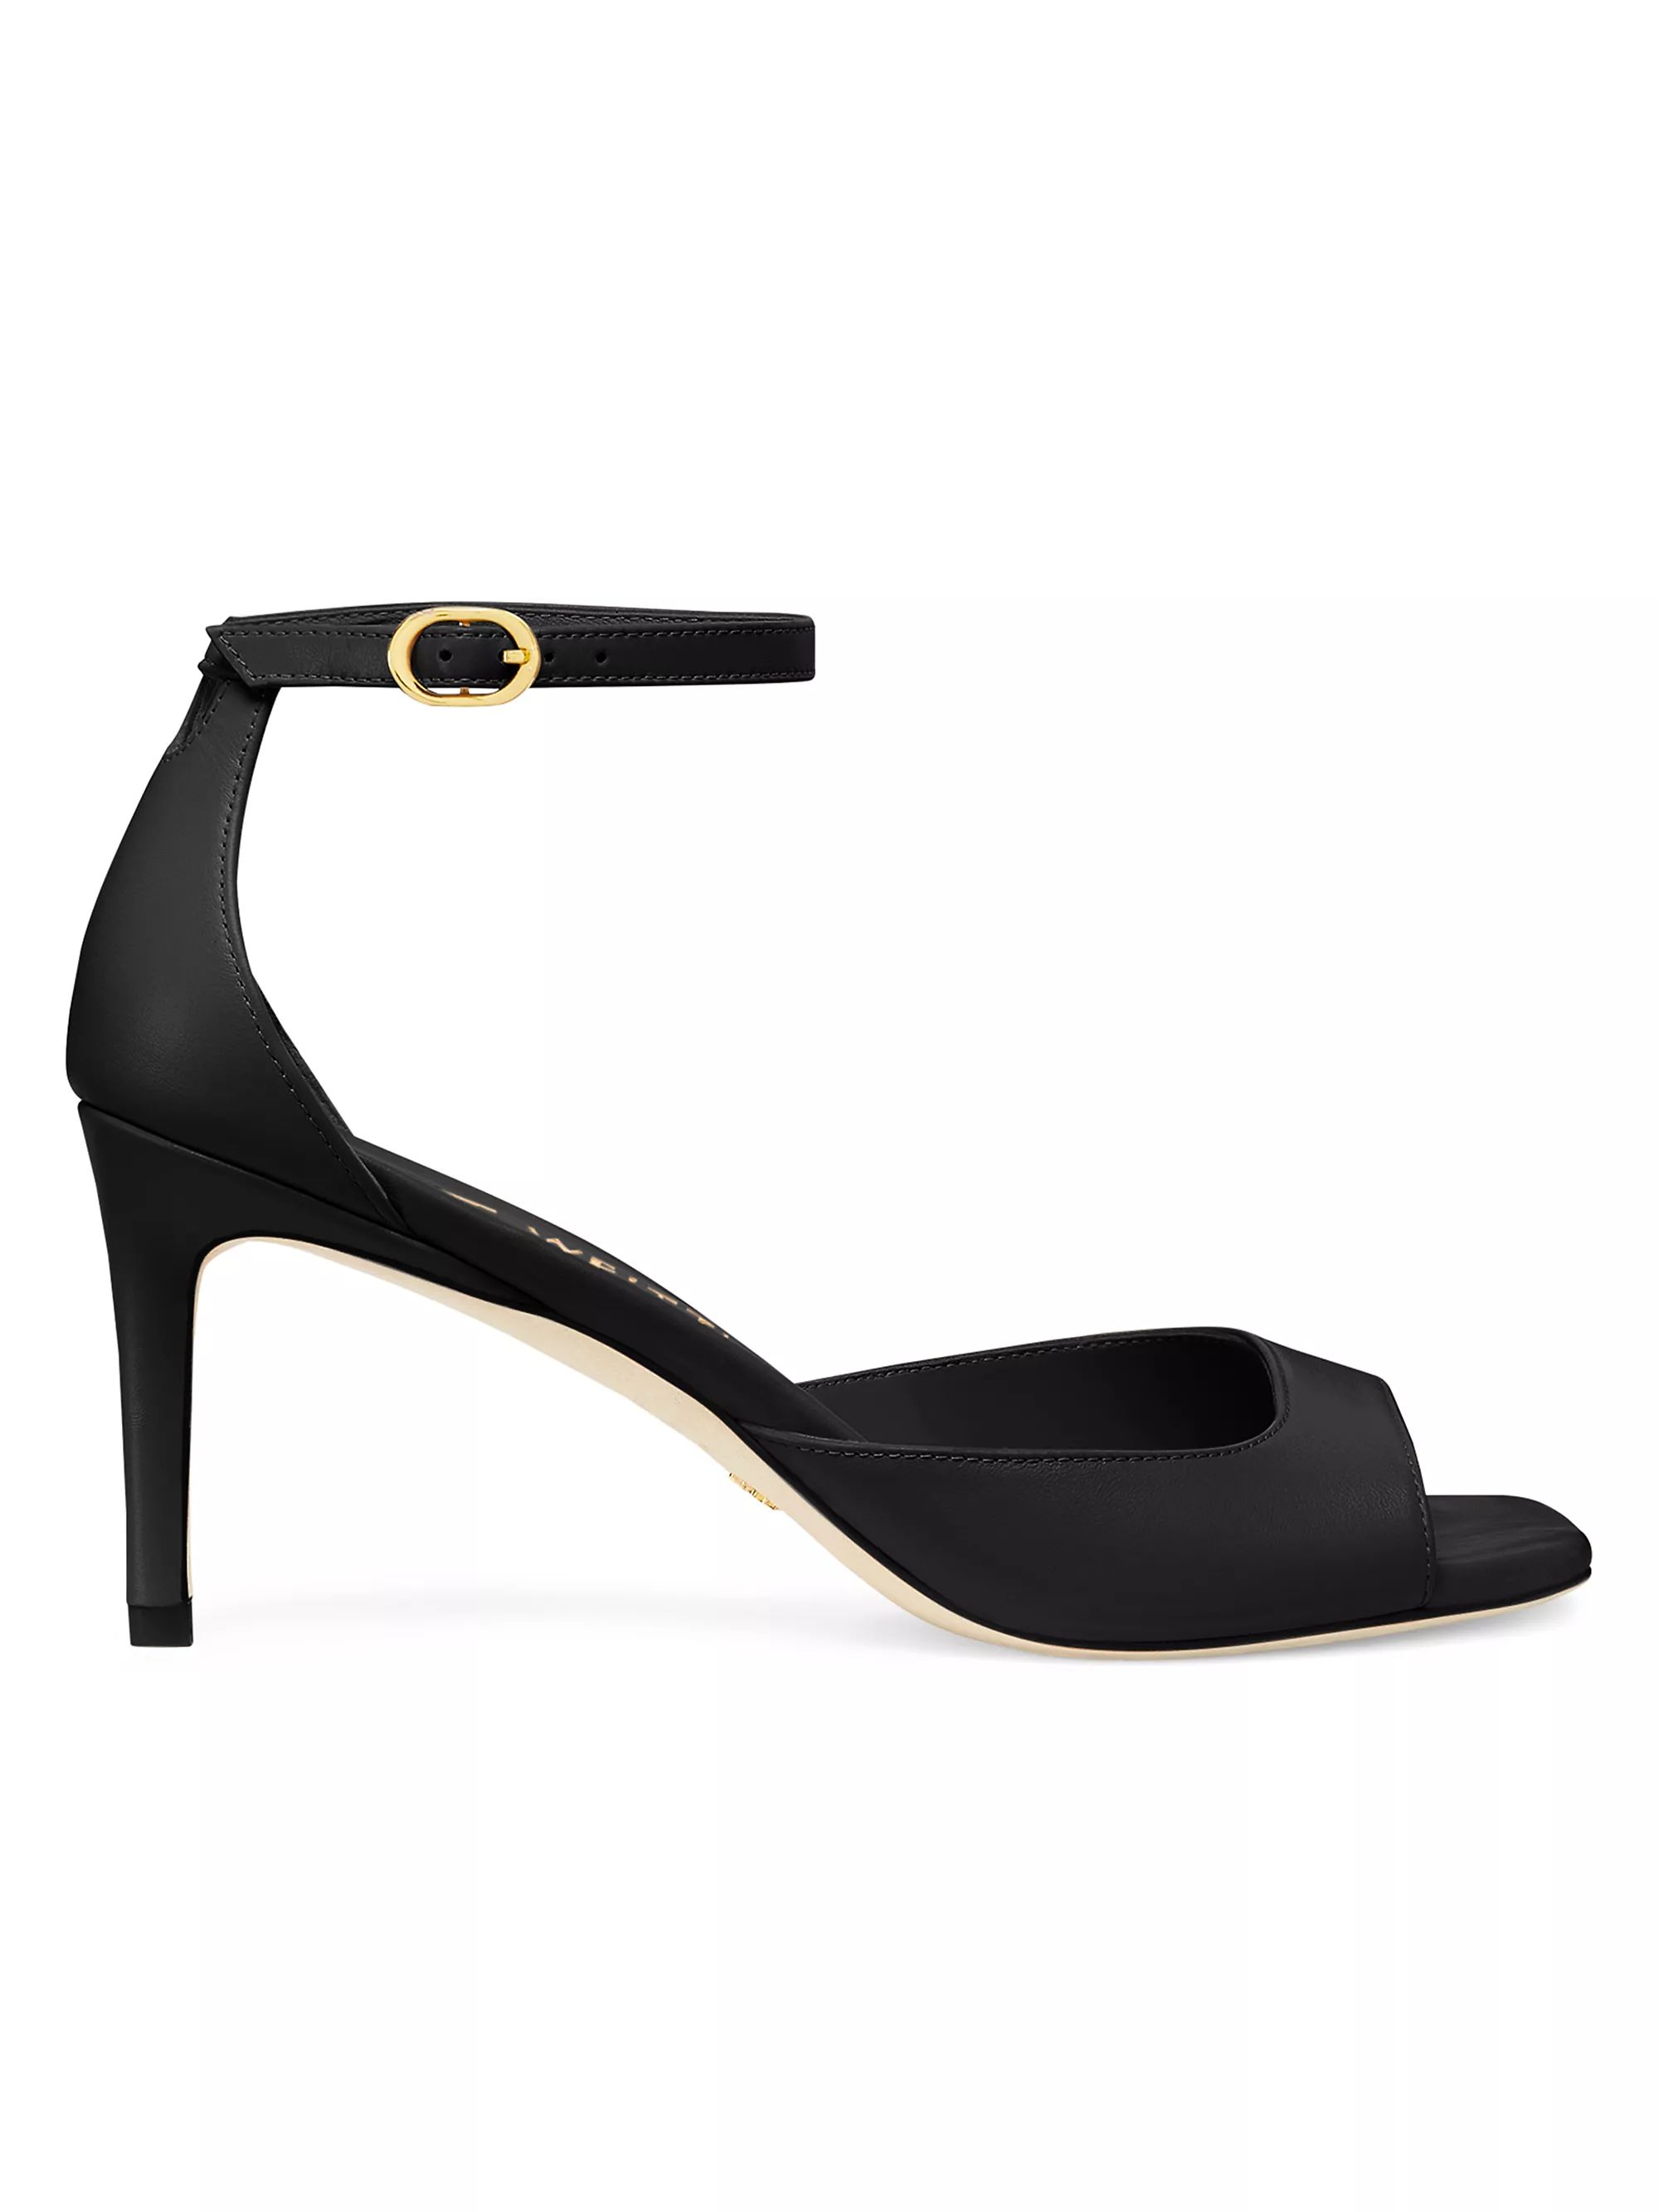 Nudistia 75MM Leather Ankle-Wrap Sandals | Saks Fifth Avenue